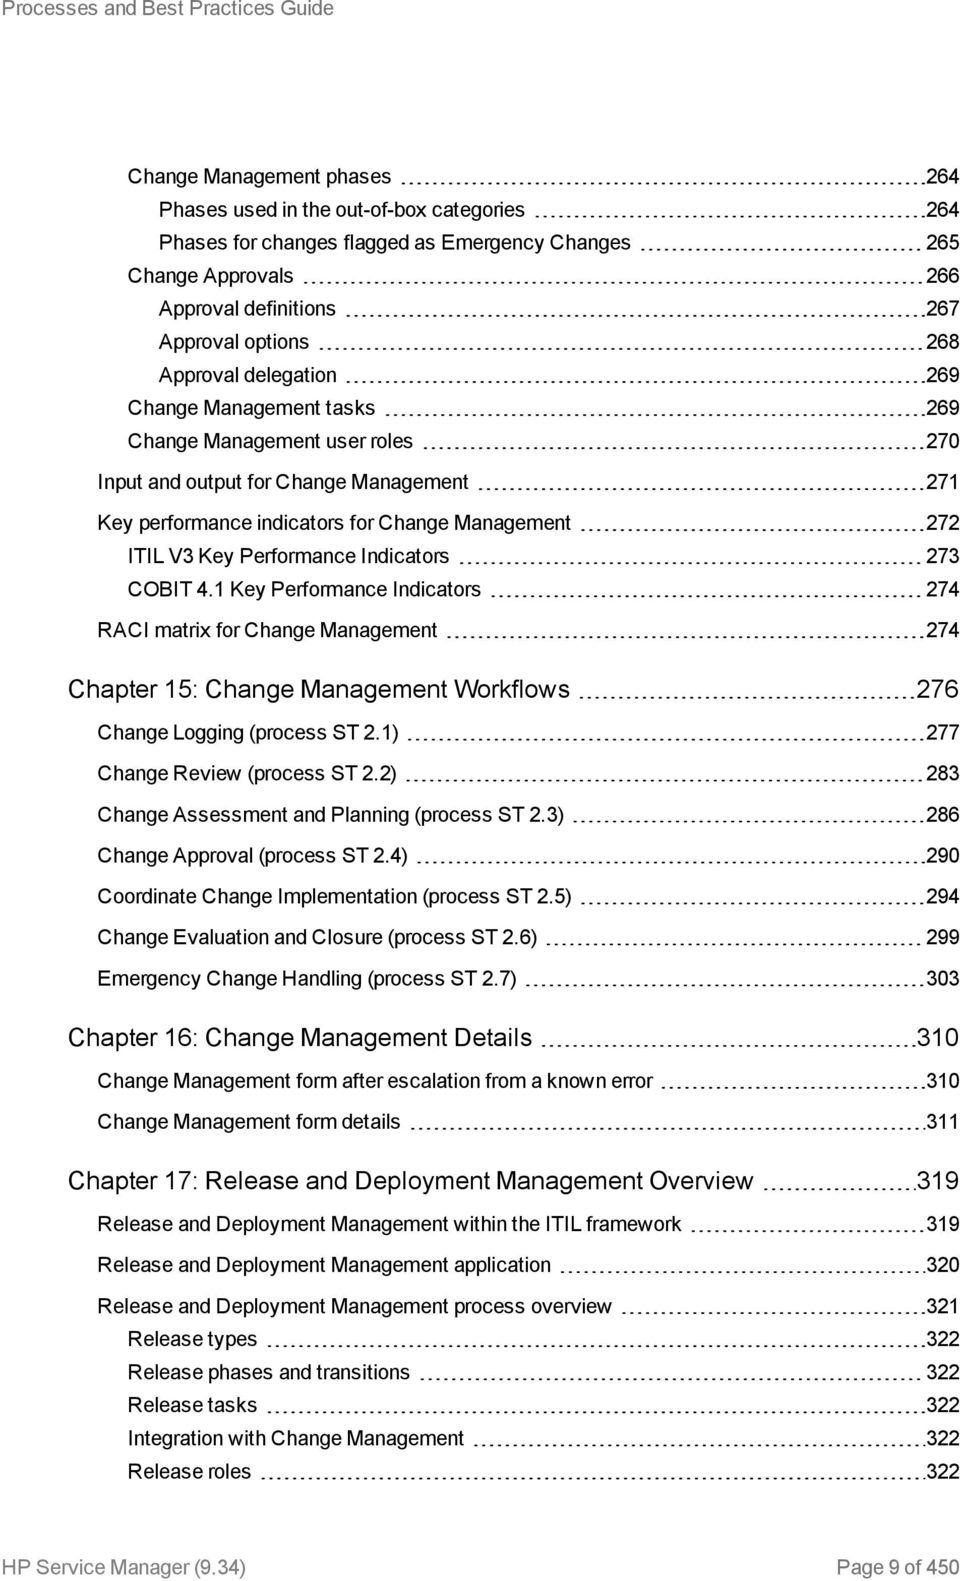 Performance Indicators 273 COBIT 4.1 Key Performance Indicators 274 RACI matrix for Change Management 274 Chapter 15: Change Management Workflows 276 Change Logging (process ST 2.